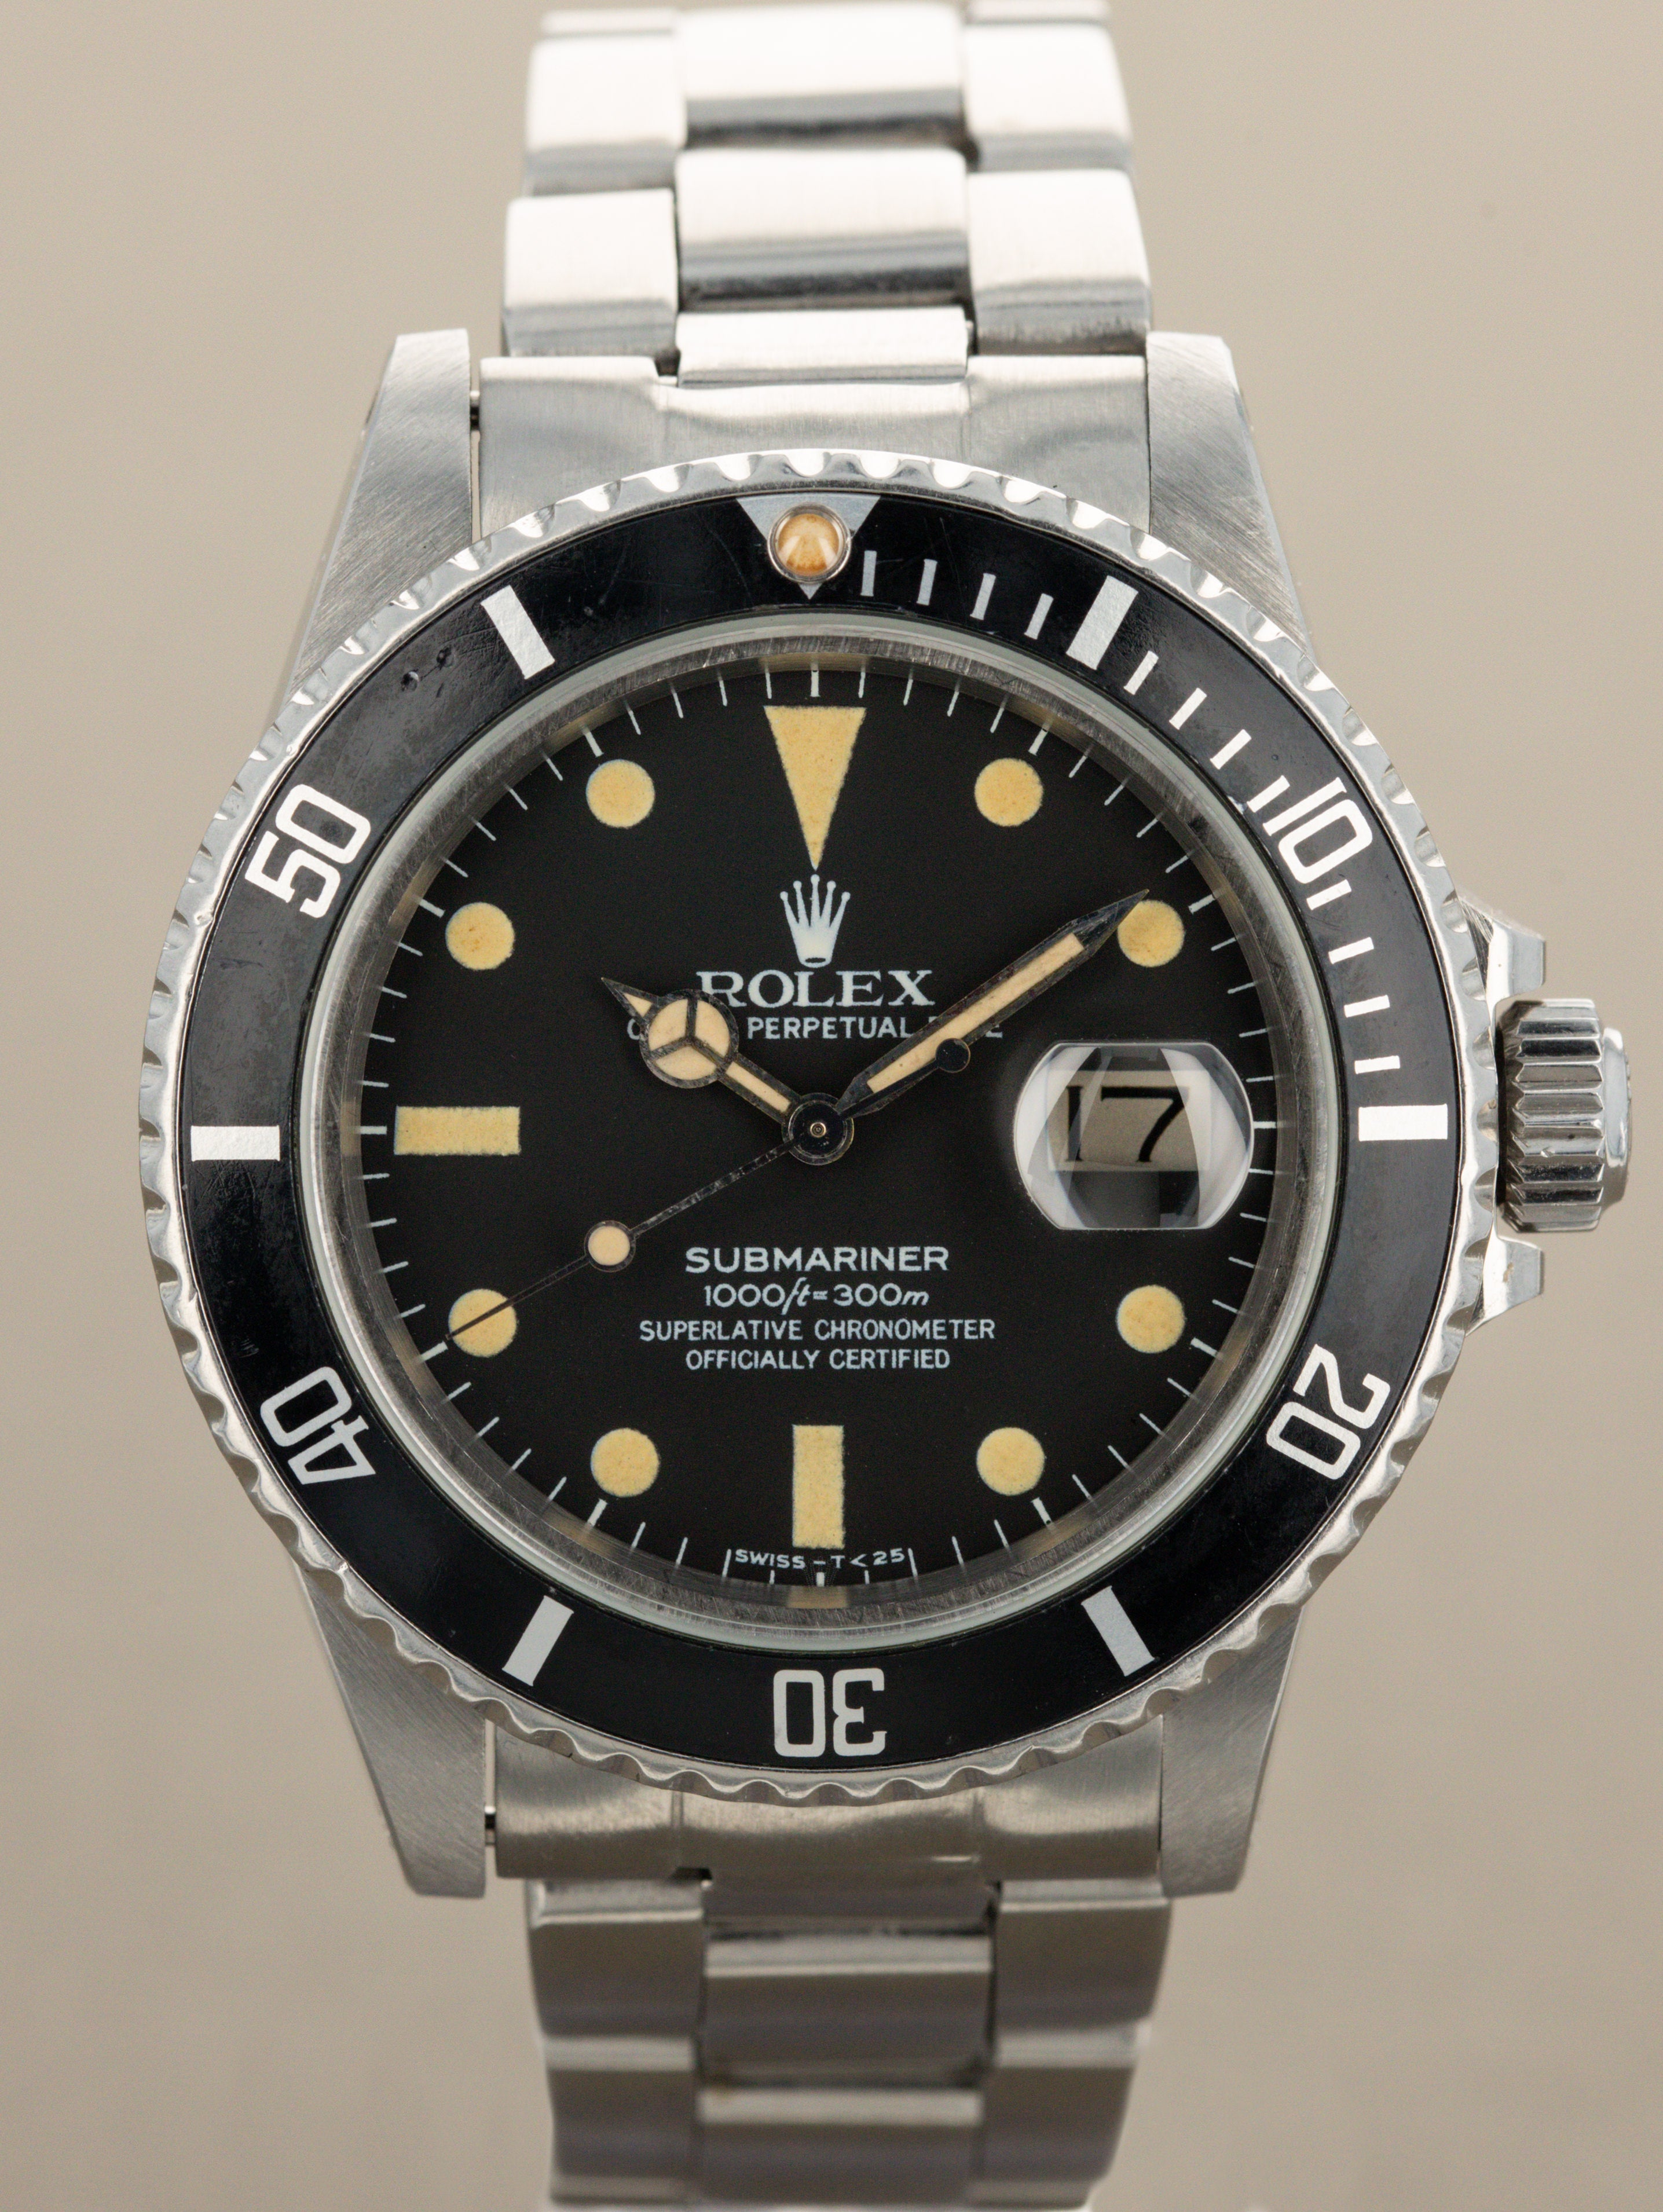 Rolex Submariner Date Ref. 16800 - Matte Dial